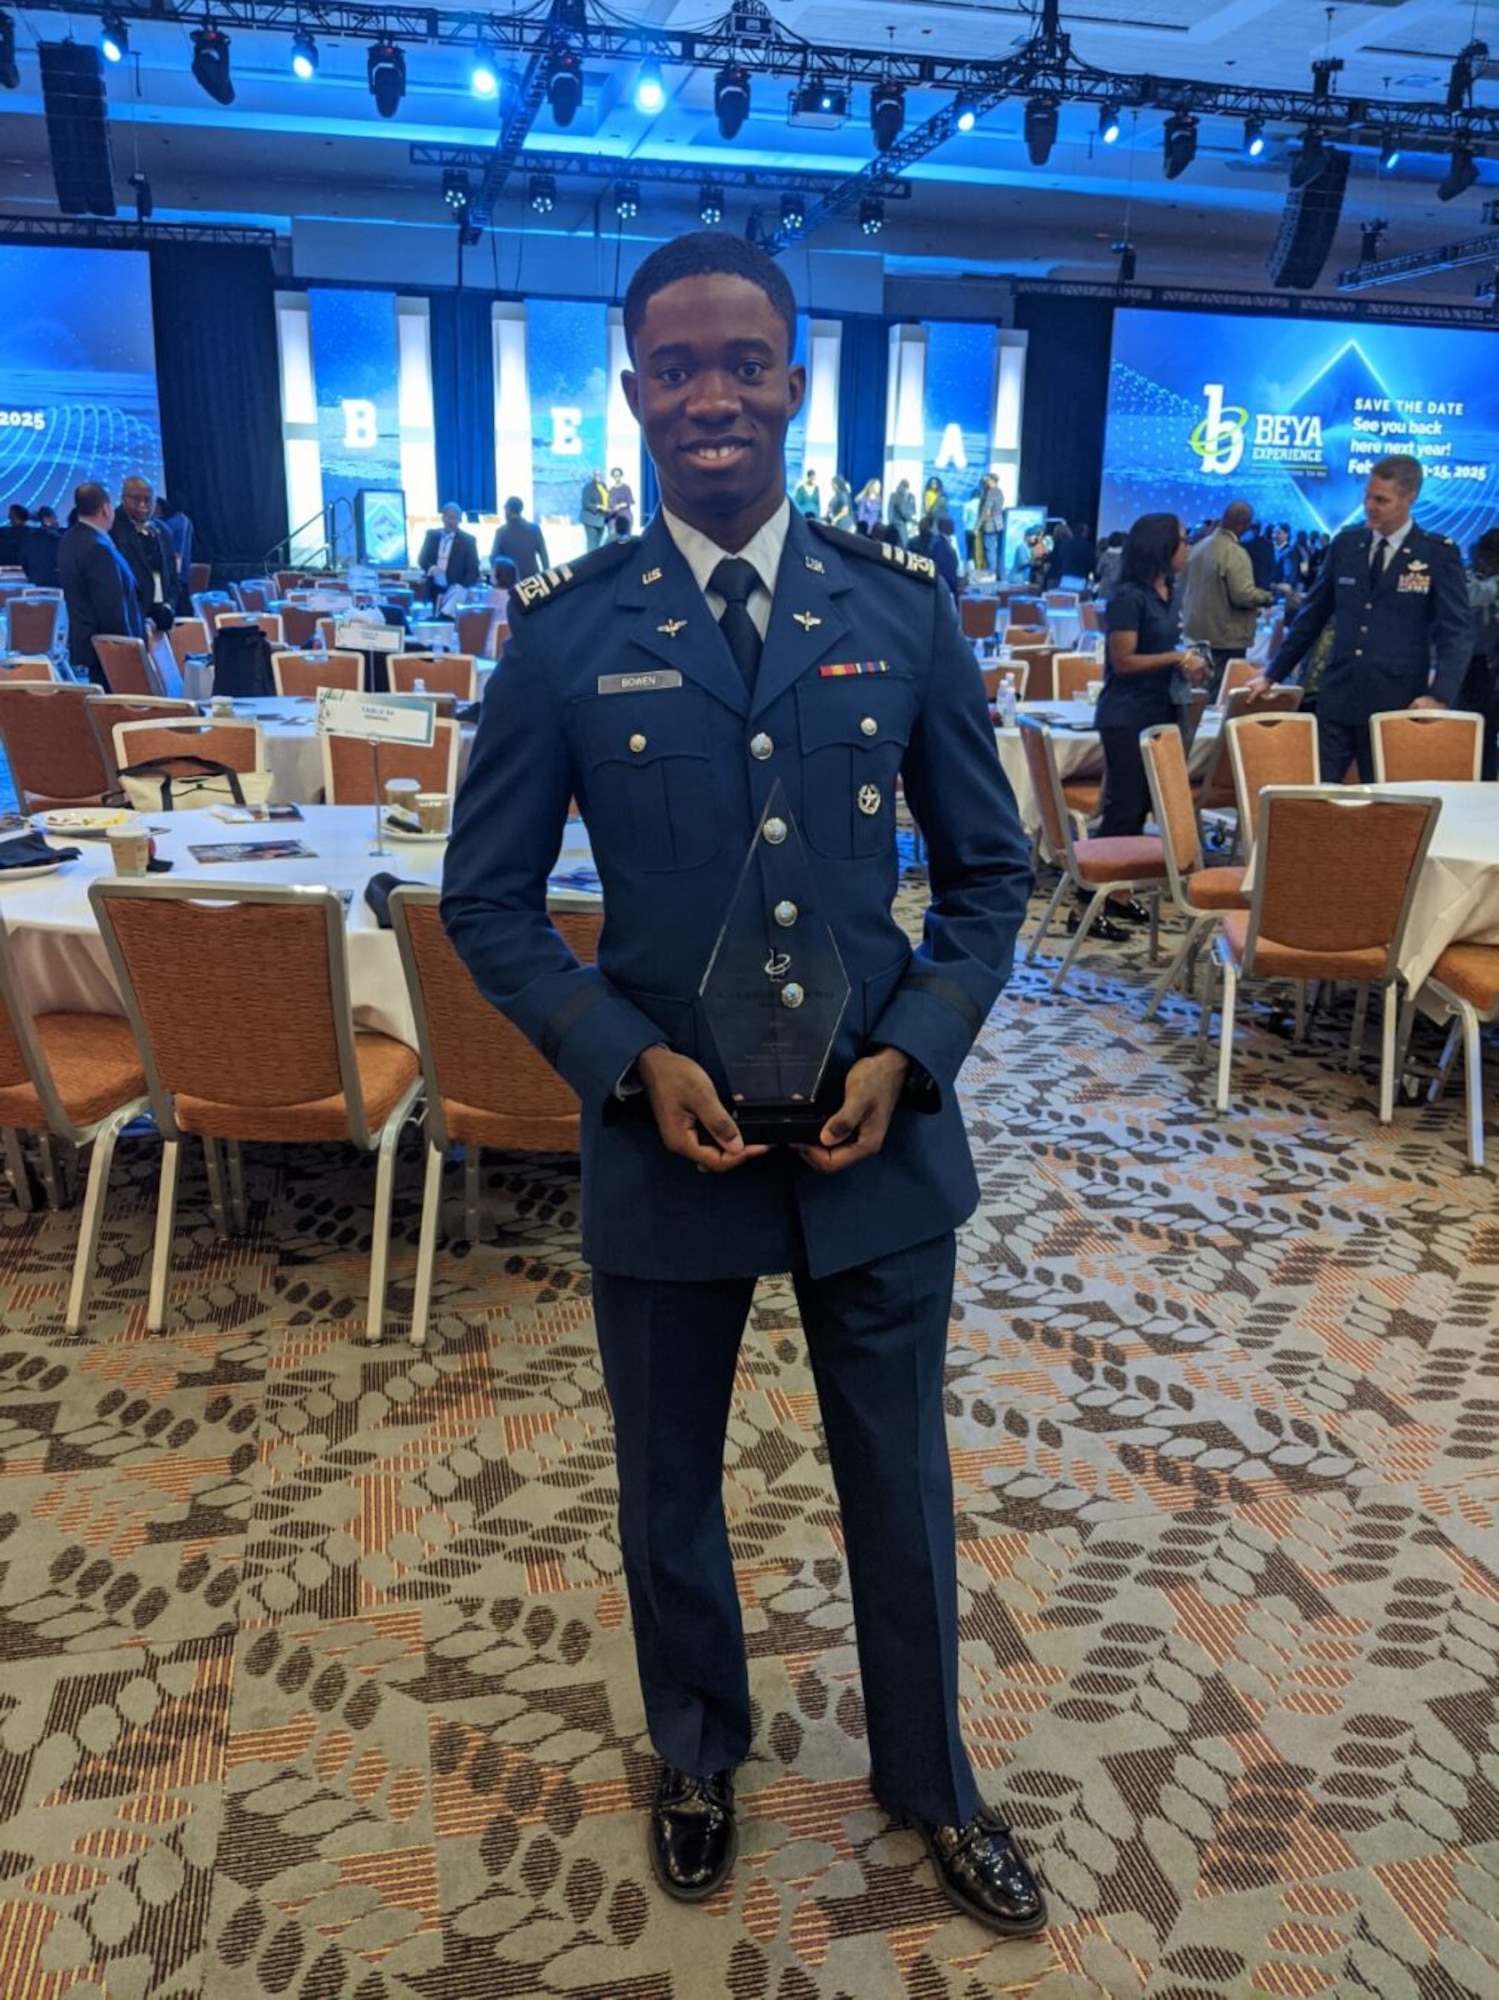 Black Engineer of the Year Award winner